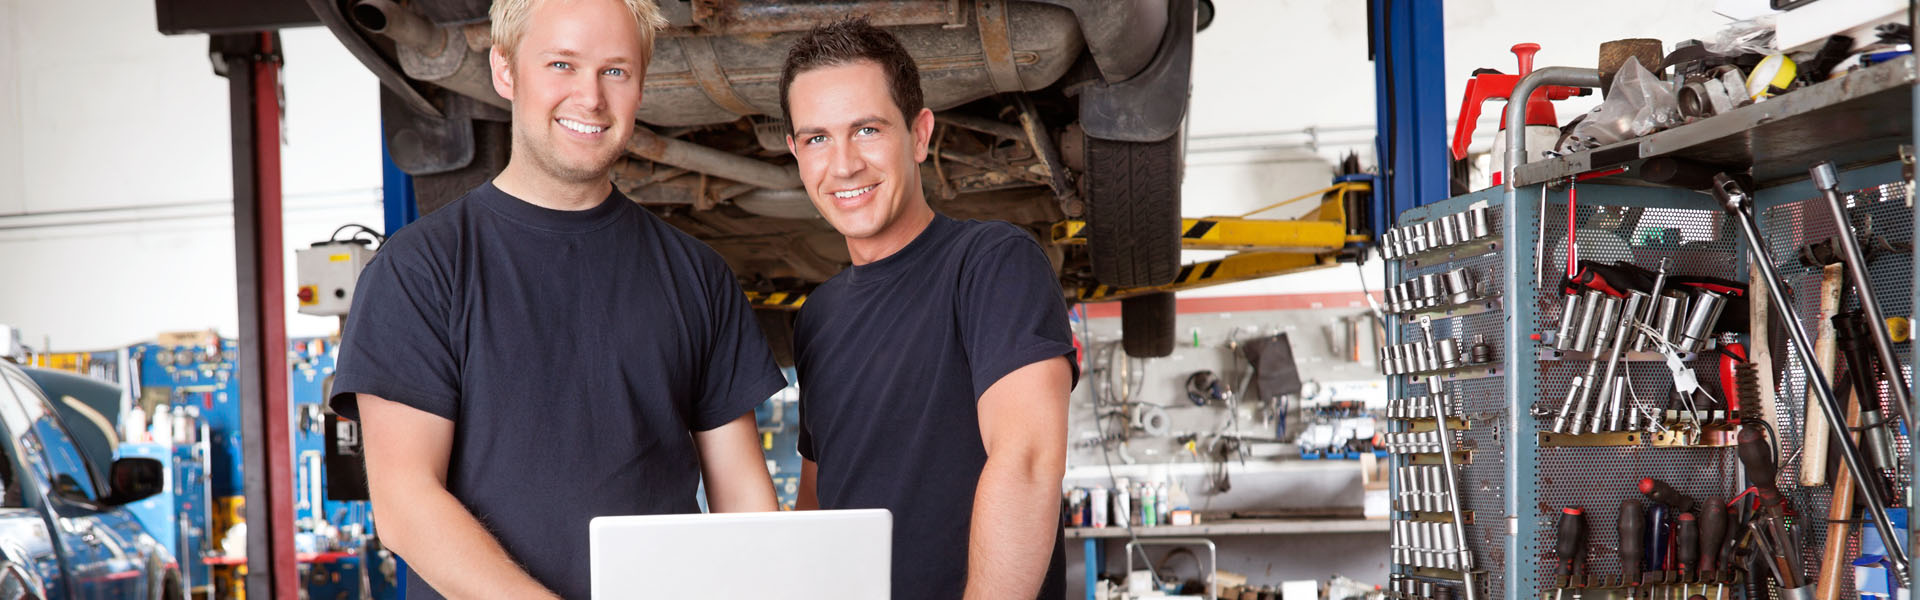 Two Mechanics at the Car Repairing Center